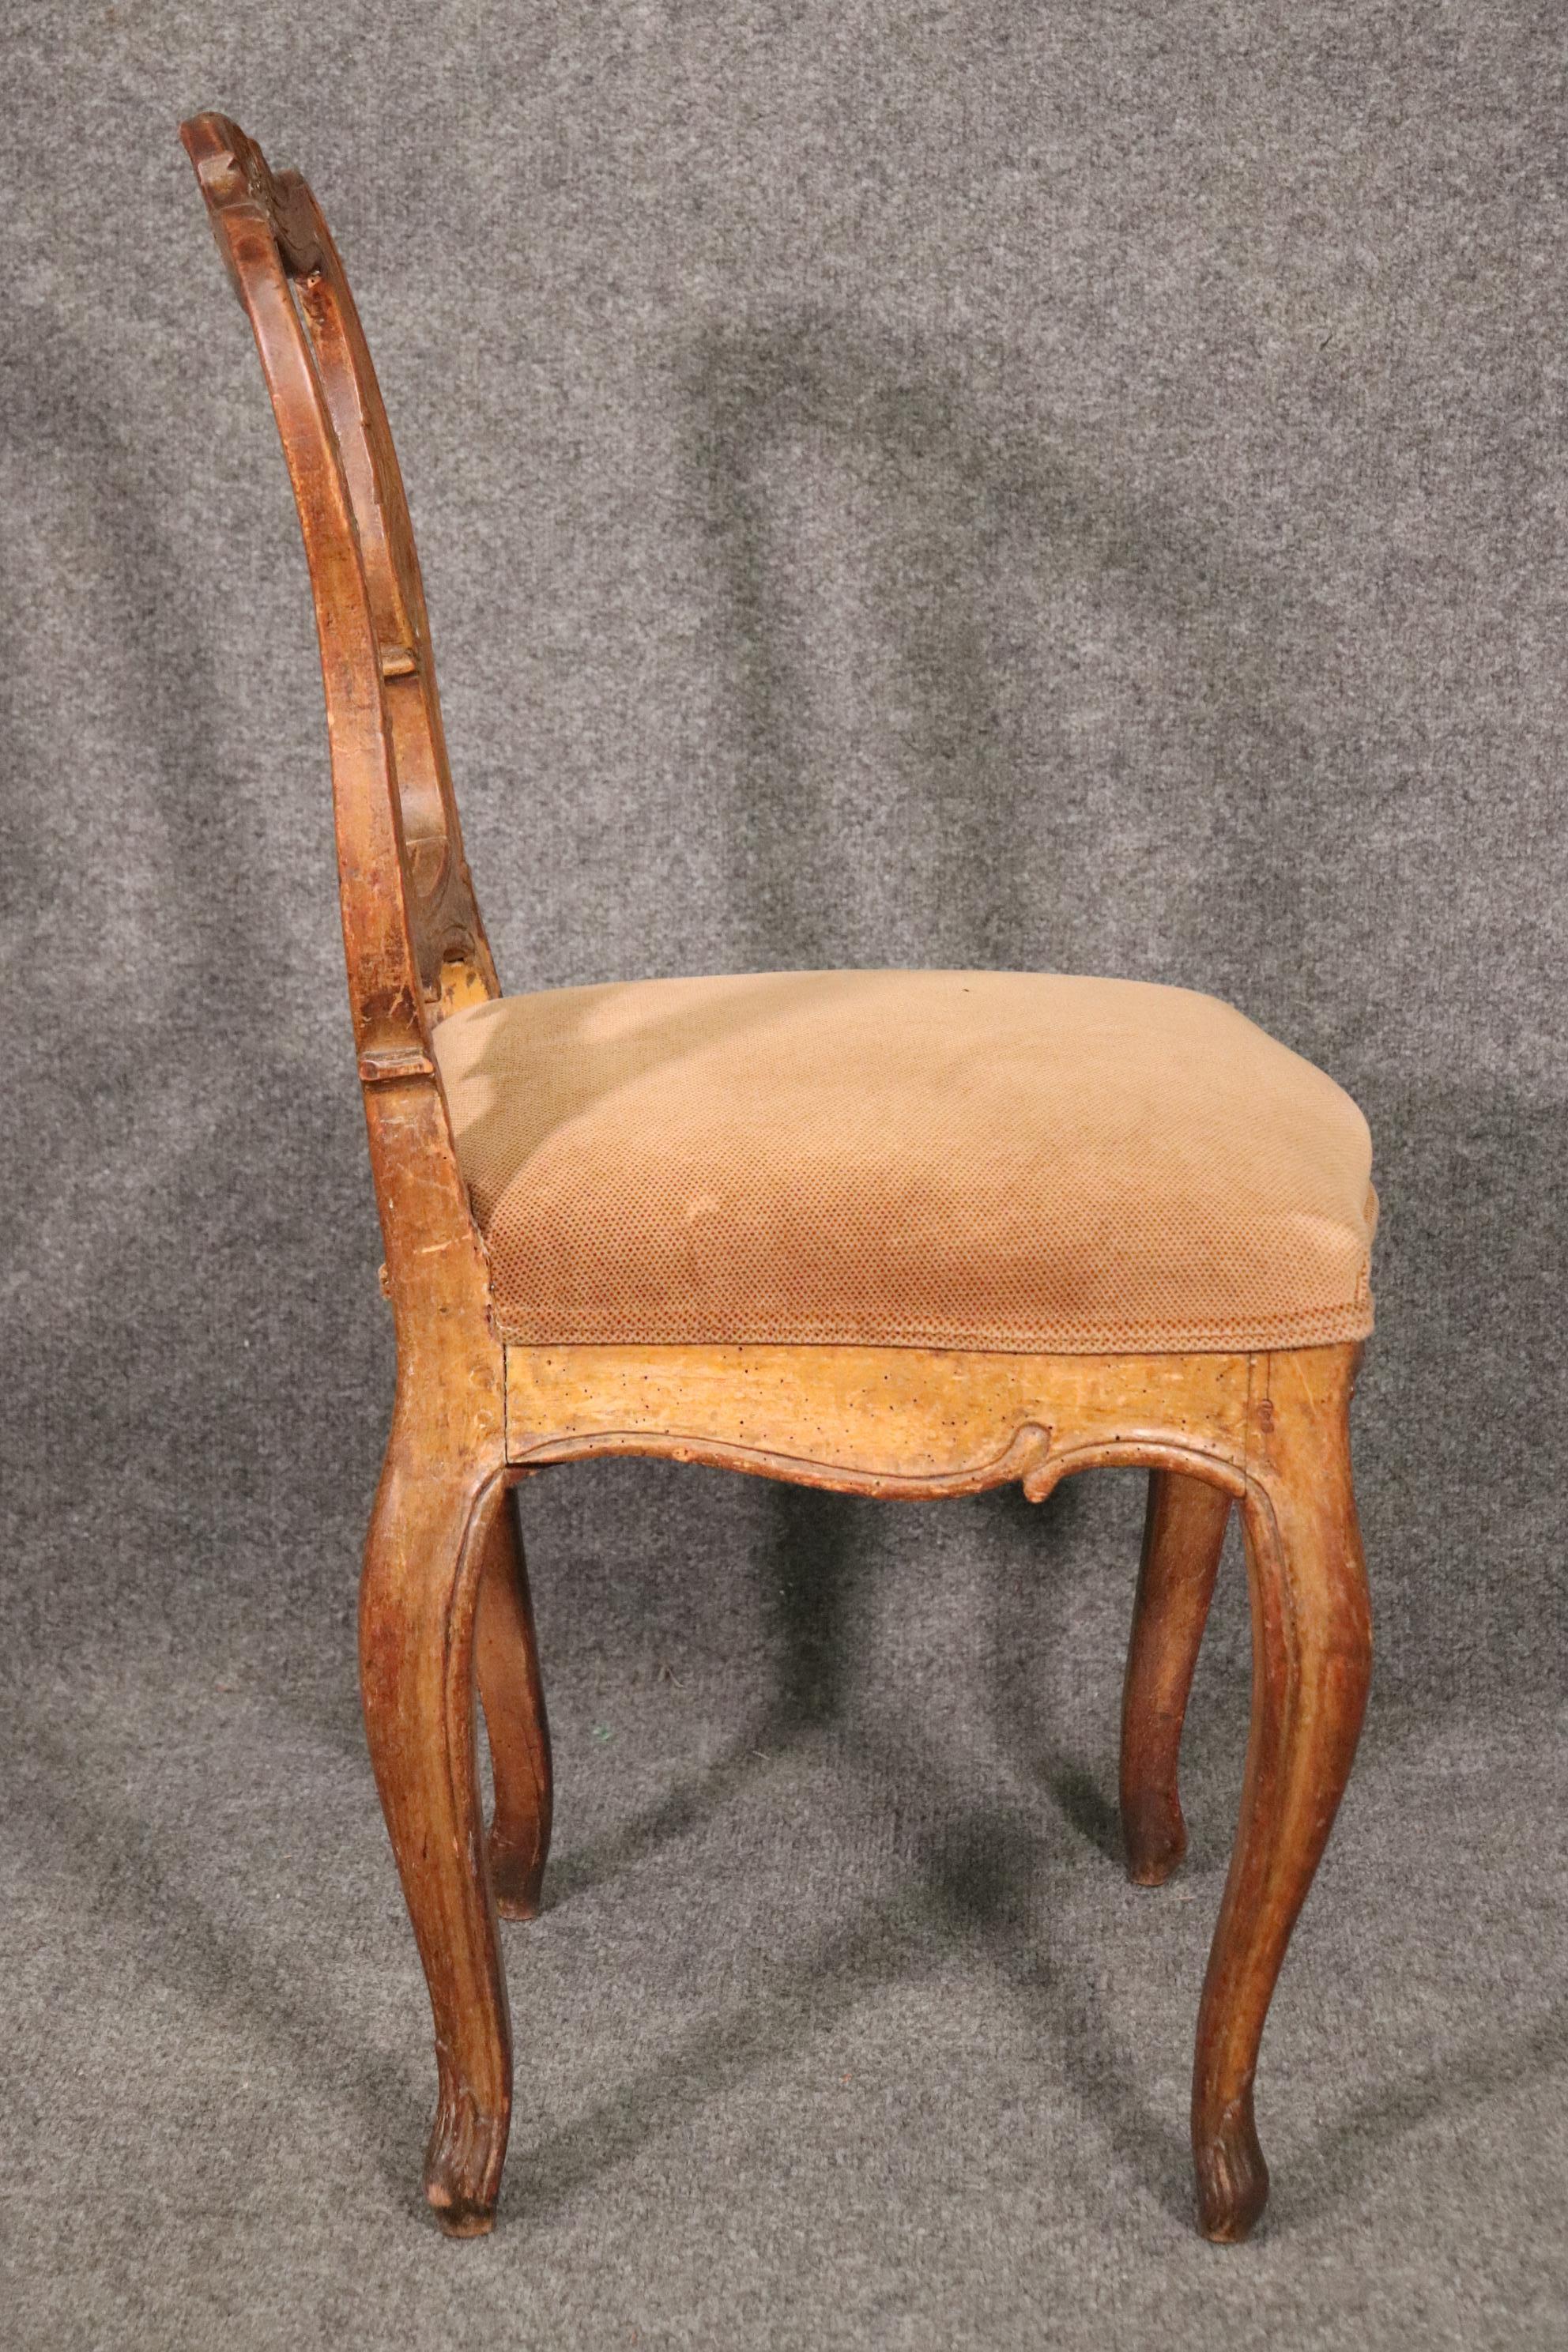 Period 1770s Era Italian Provincial Walnut Desk or Vanity Chair For Sale 4